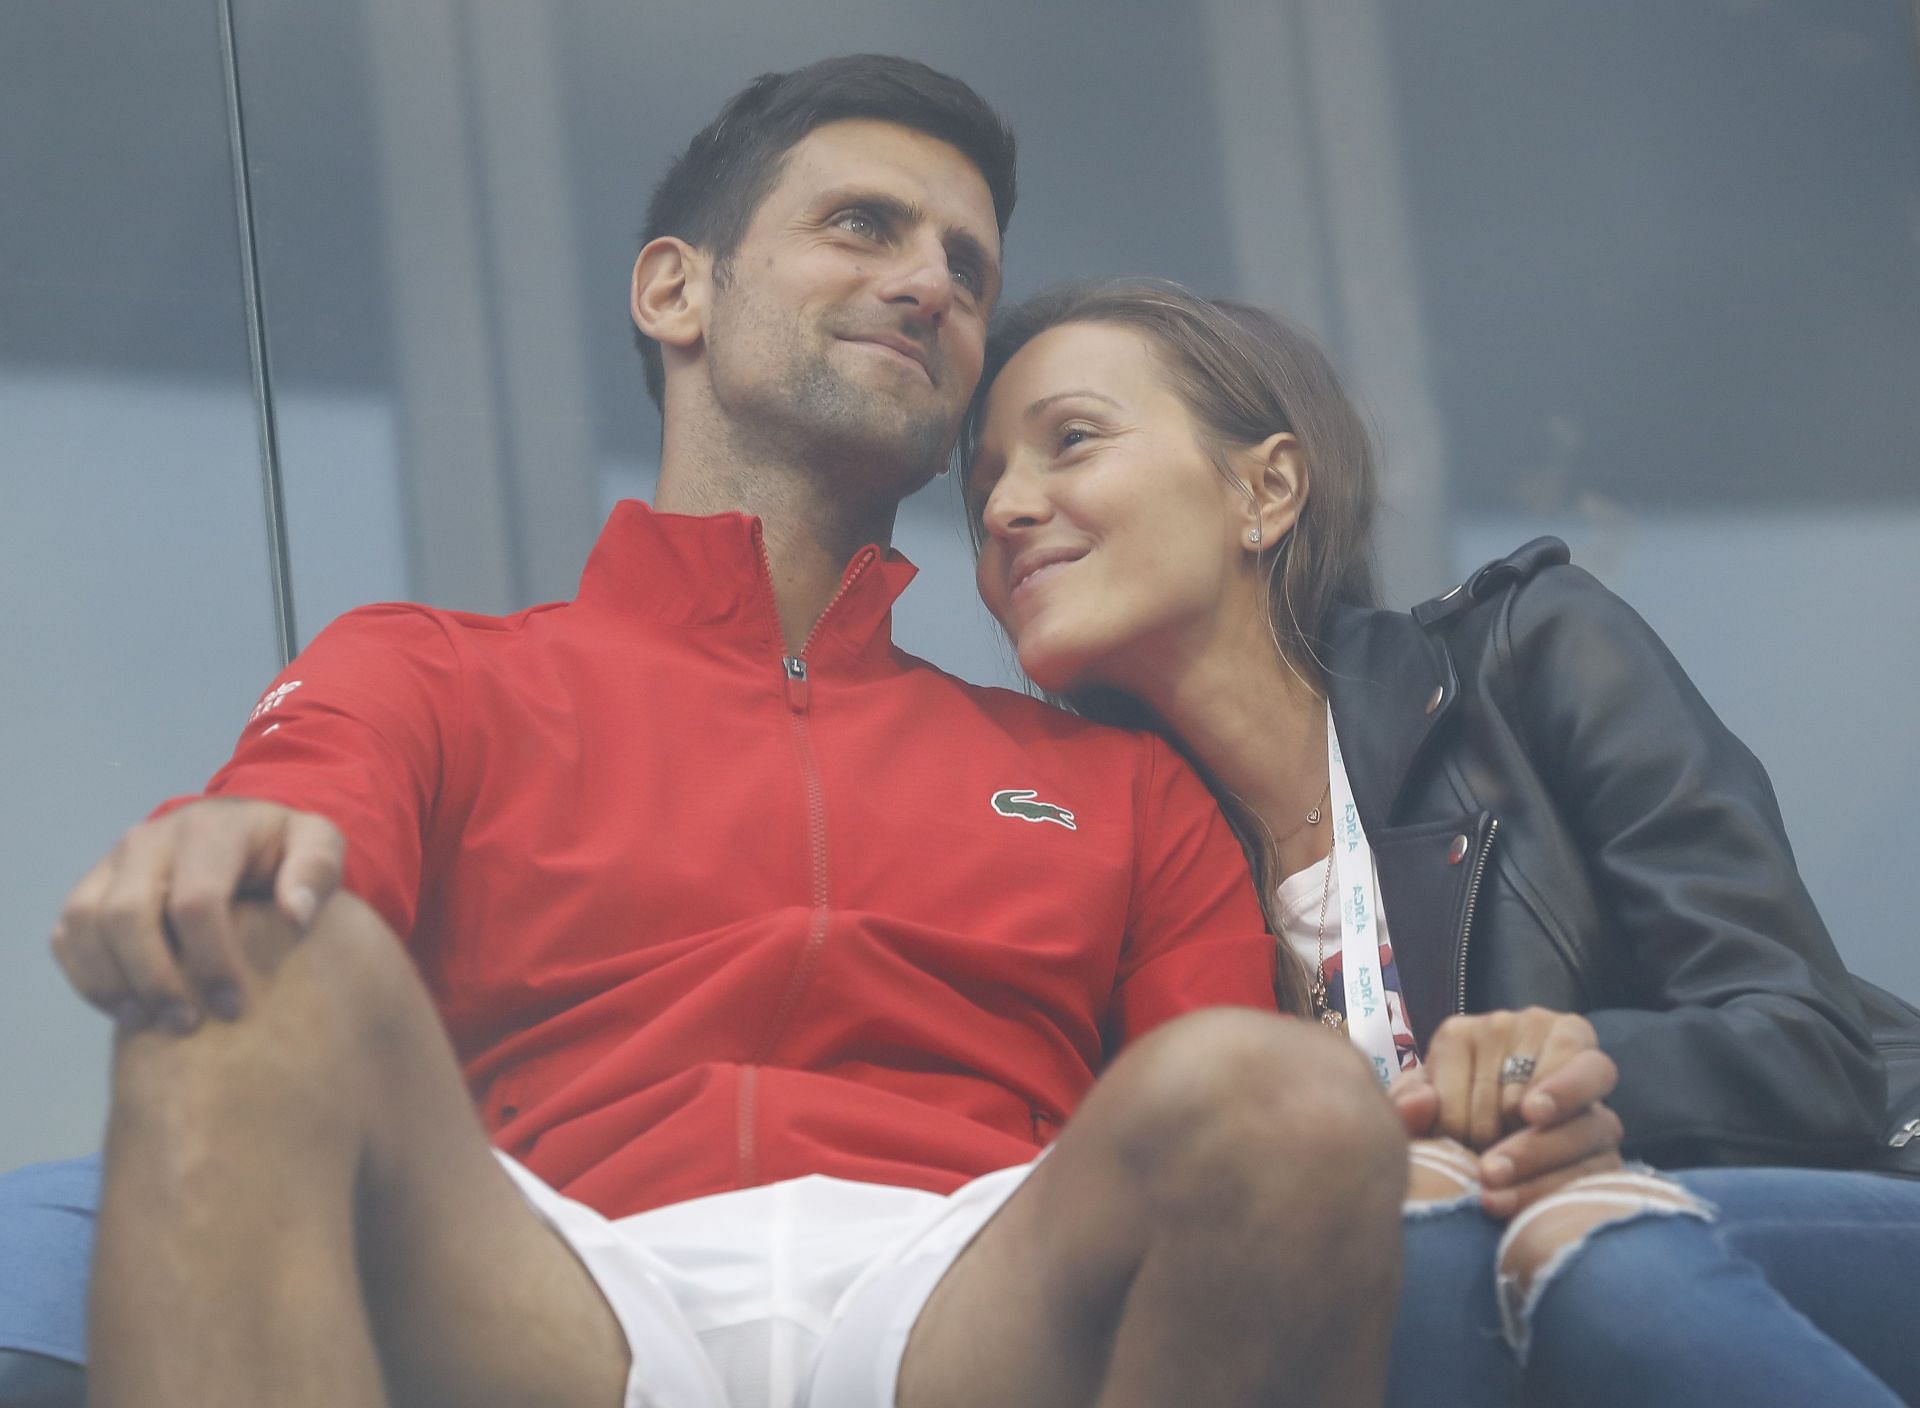 Novak Djokovic and his wife